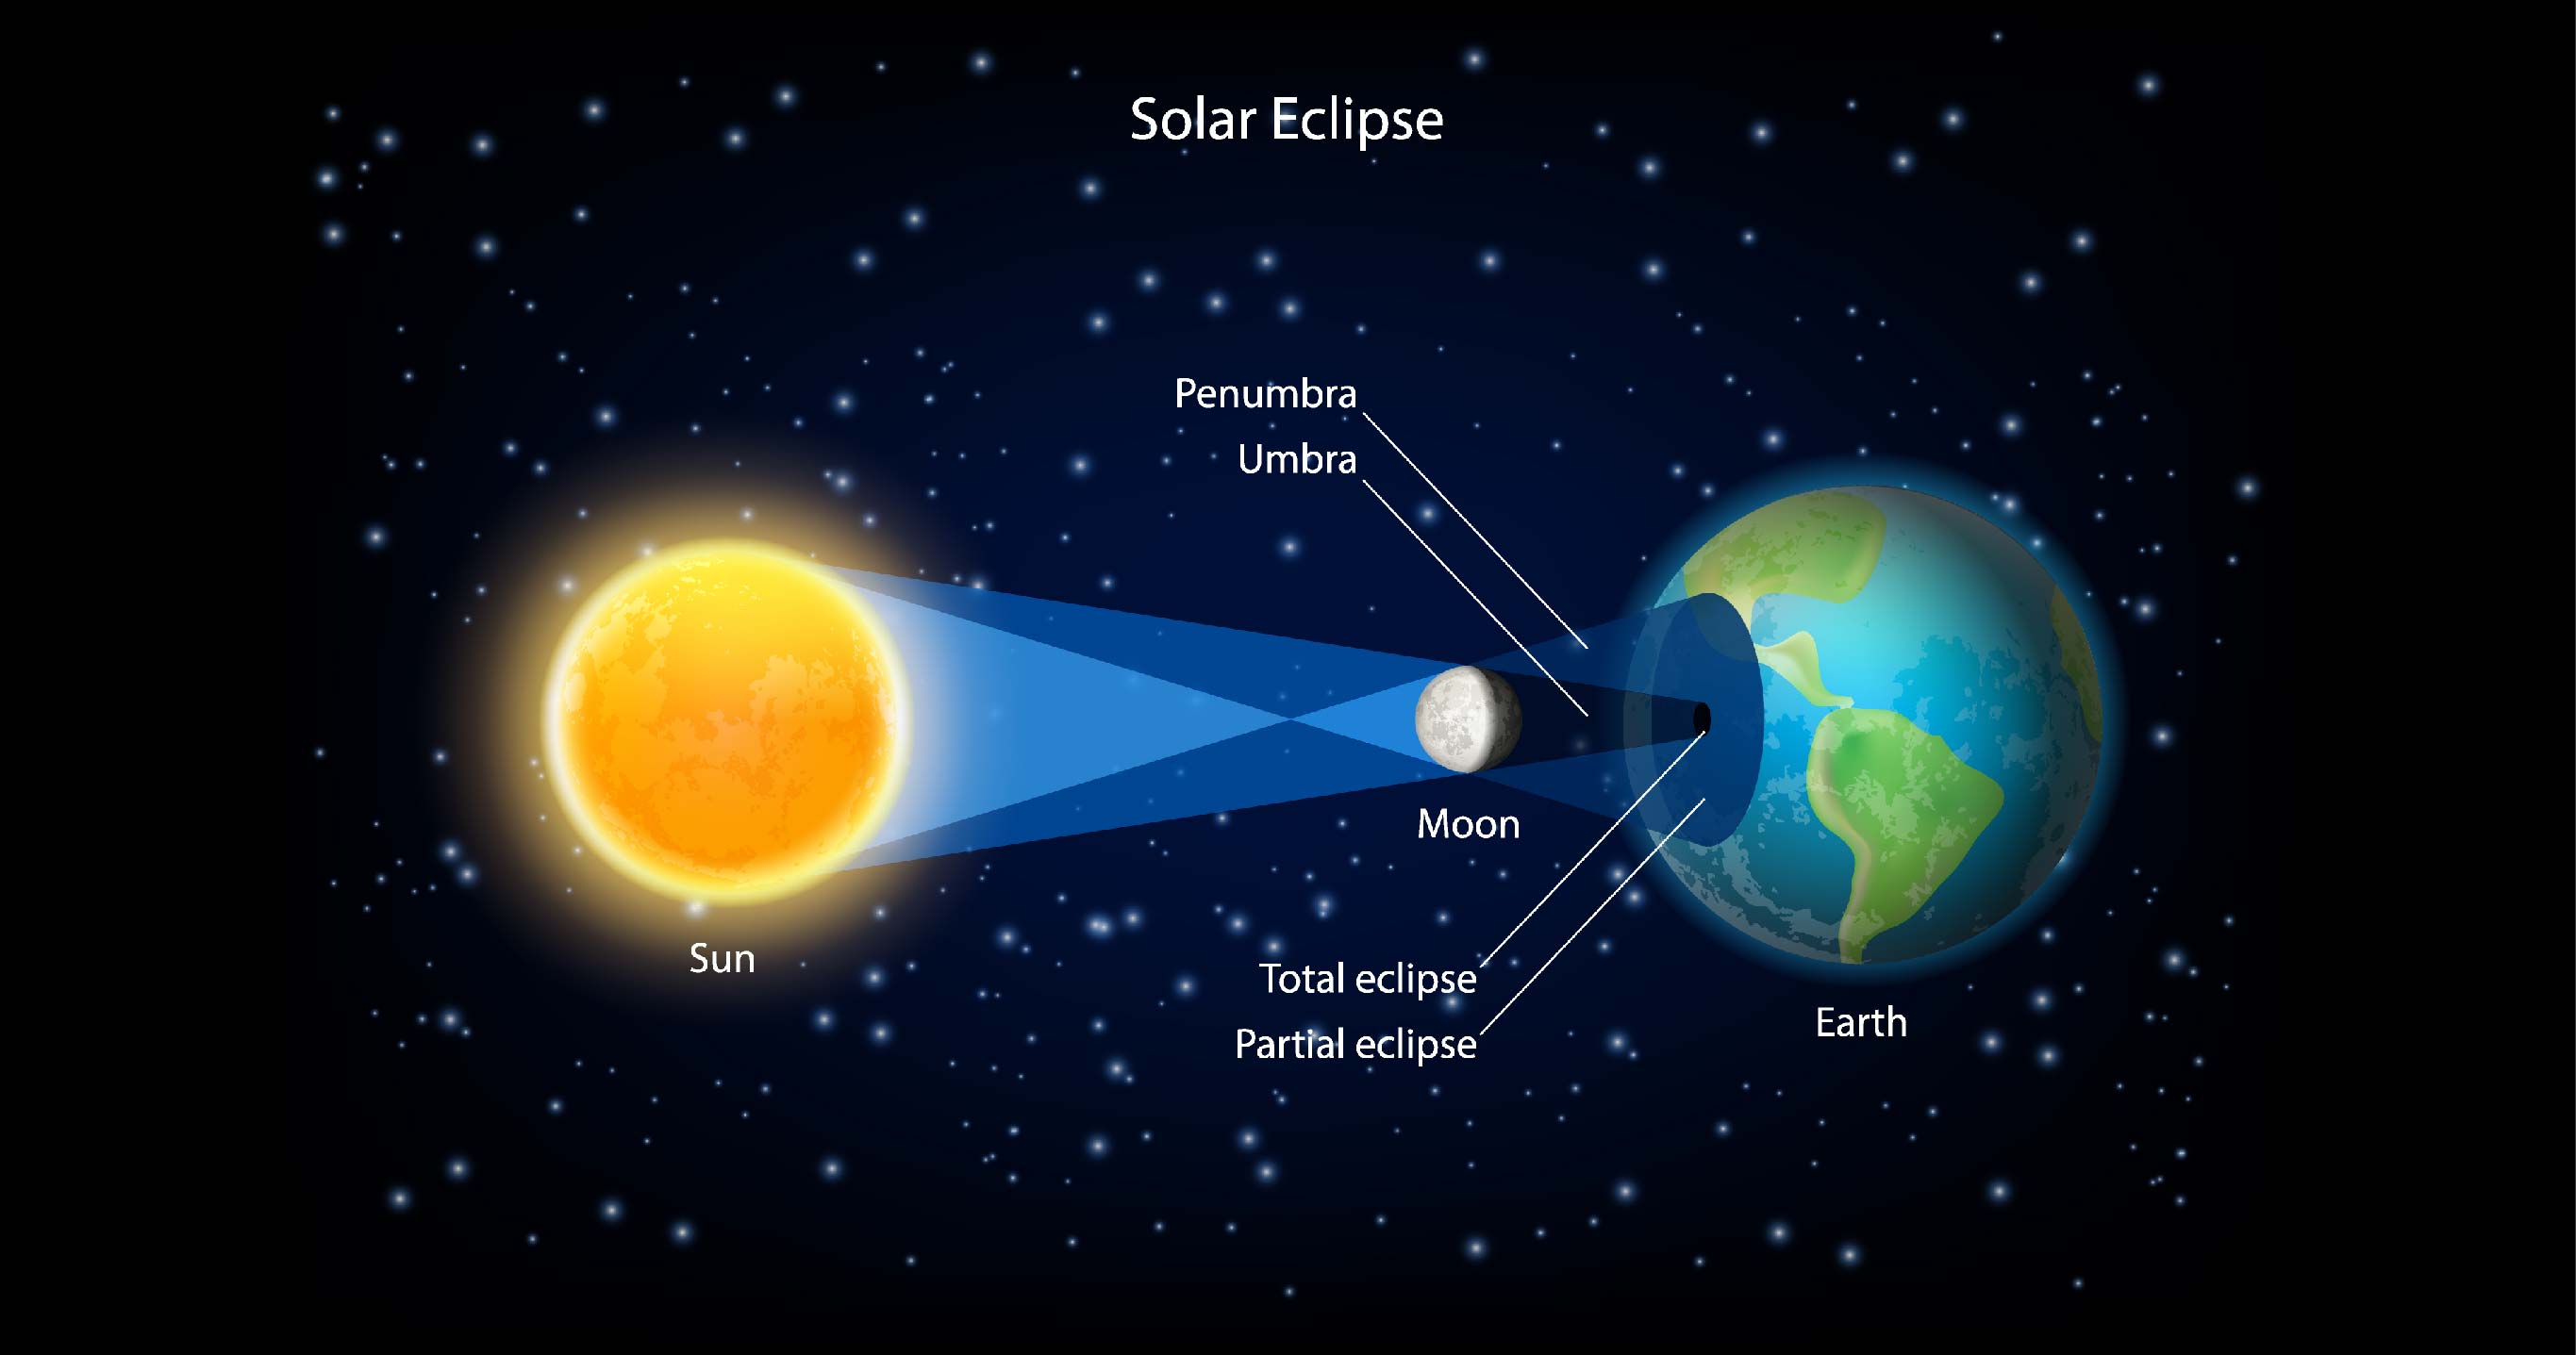 Surya Grahan - Sun Eclipse on 5/6 January 2019 - Ishwar Maharaj